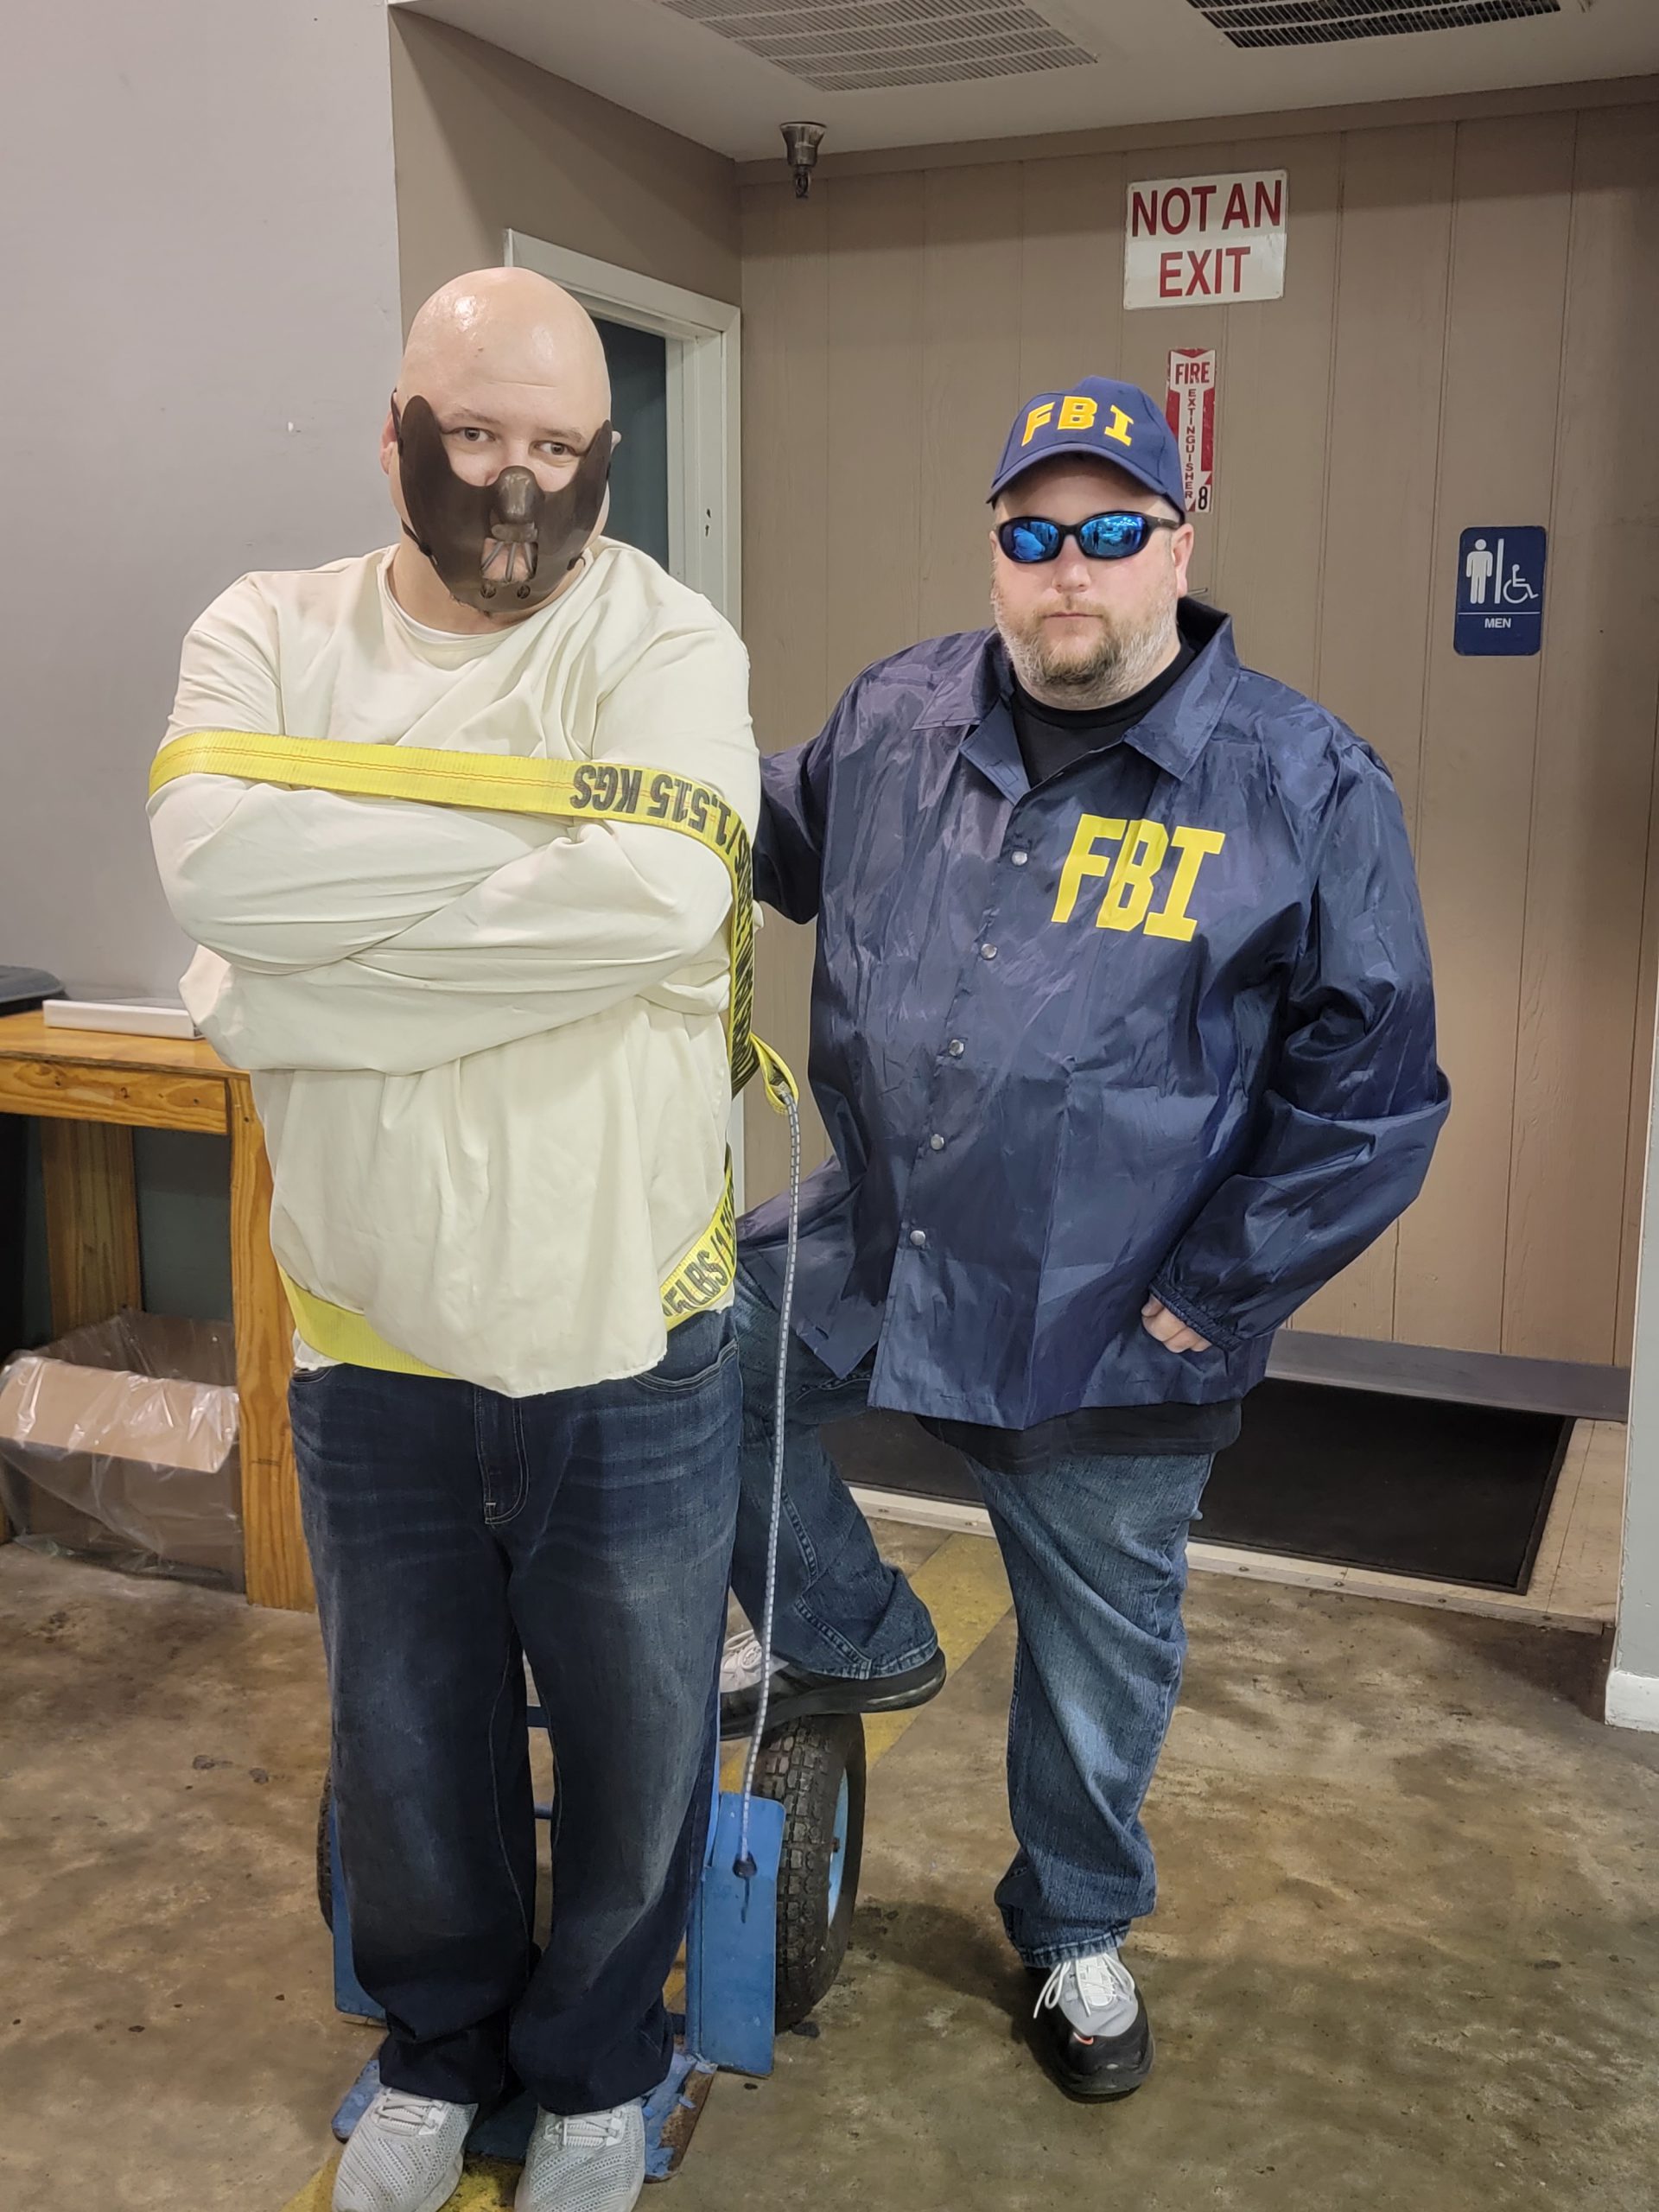 FBI and PRisioner Halloween 2021